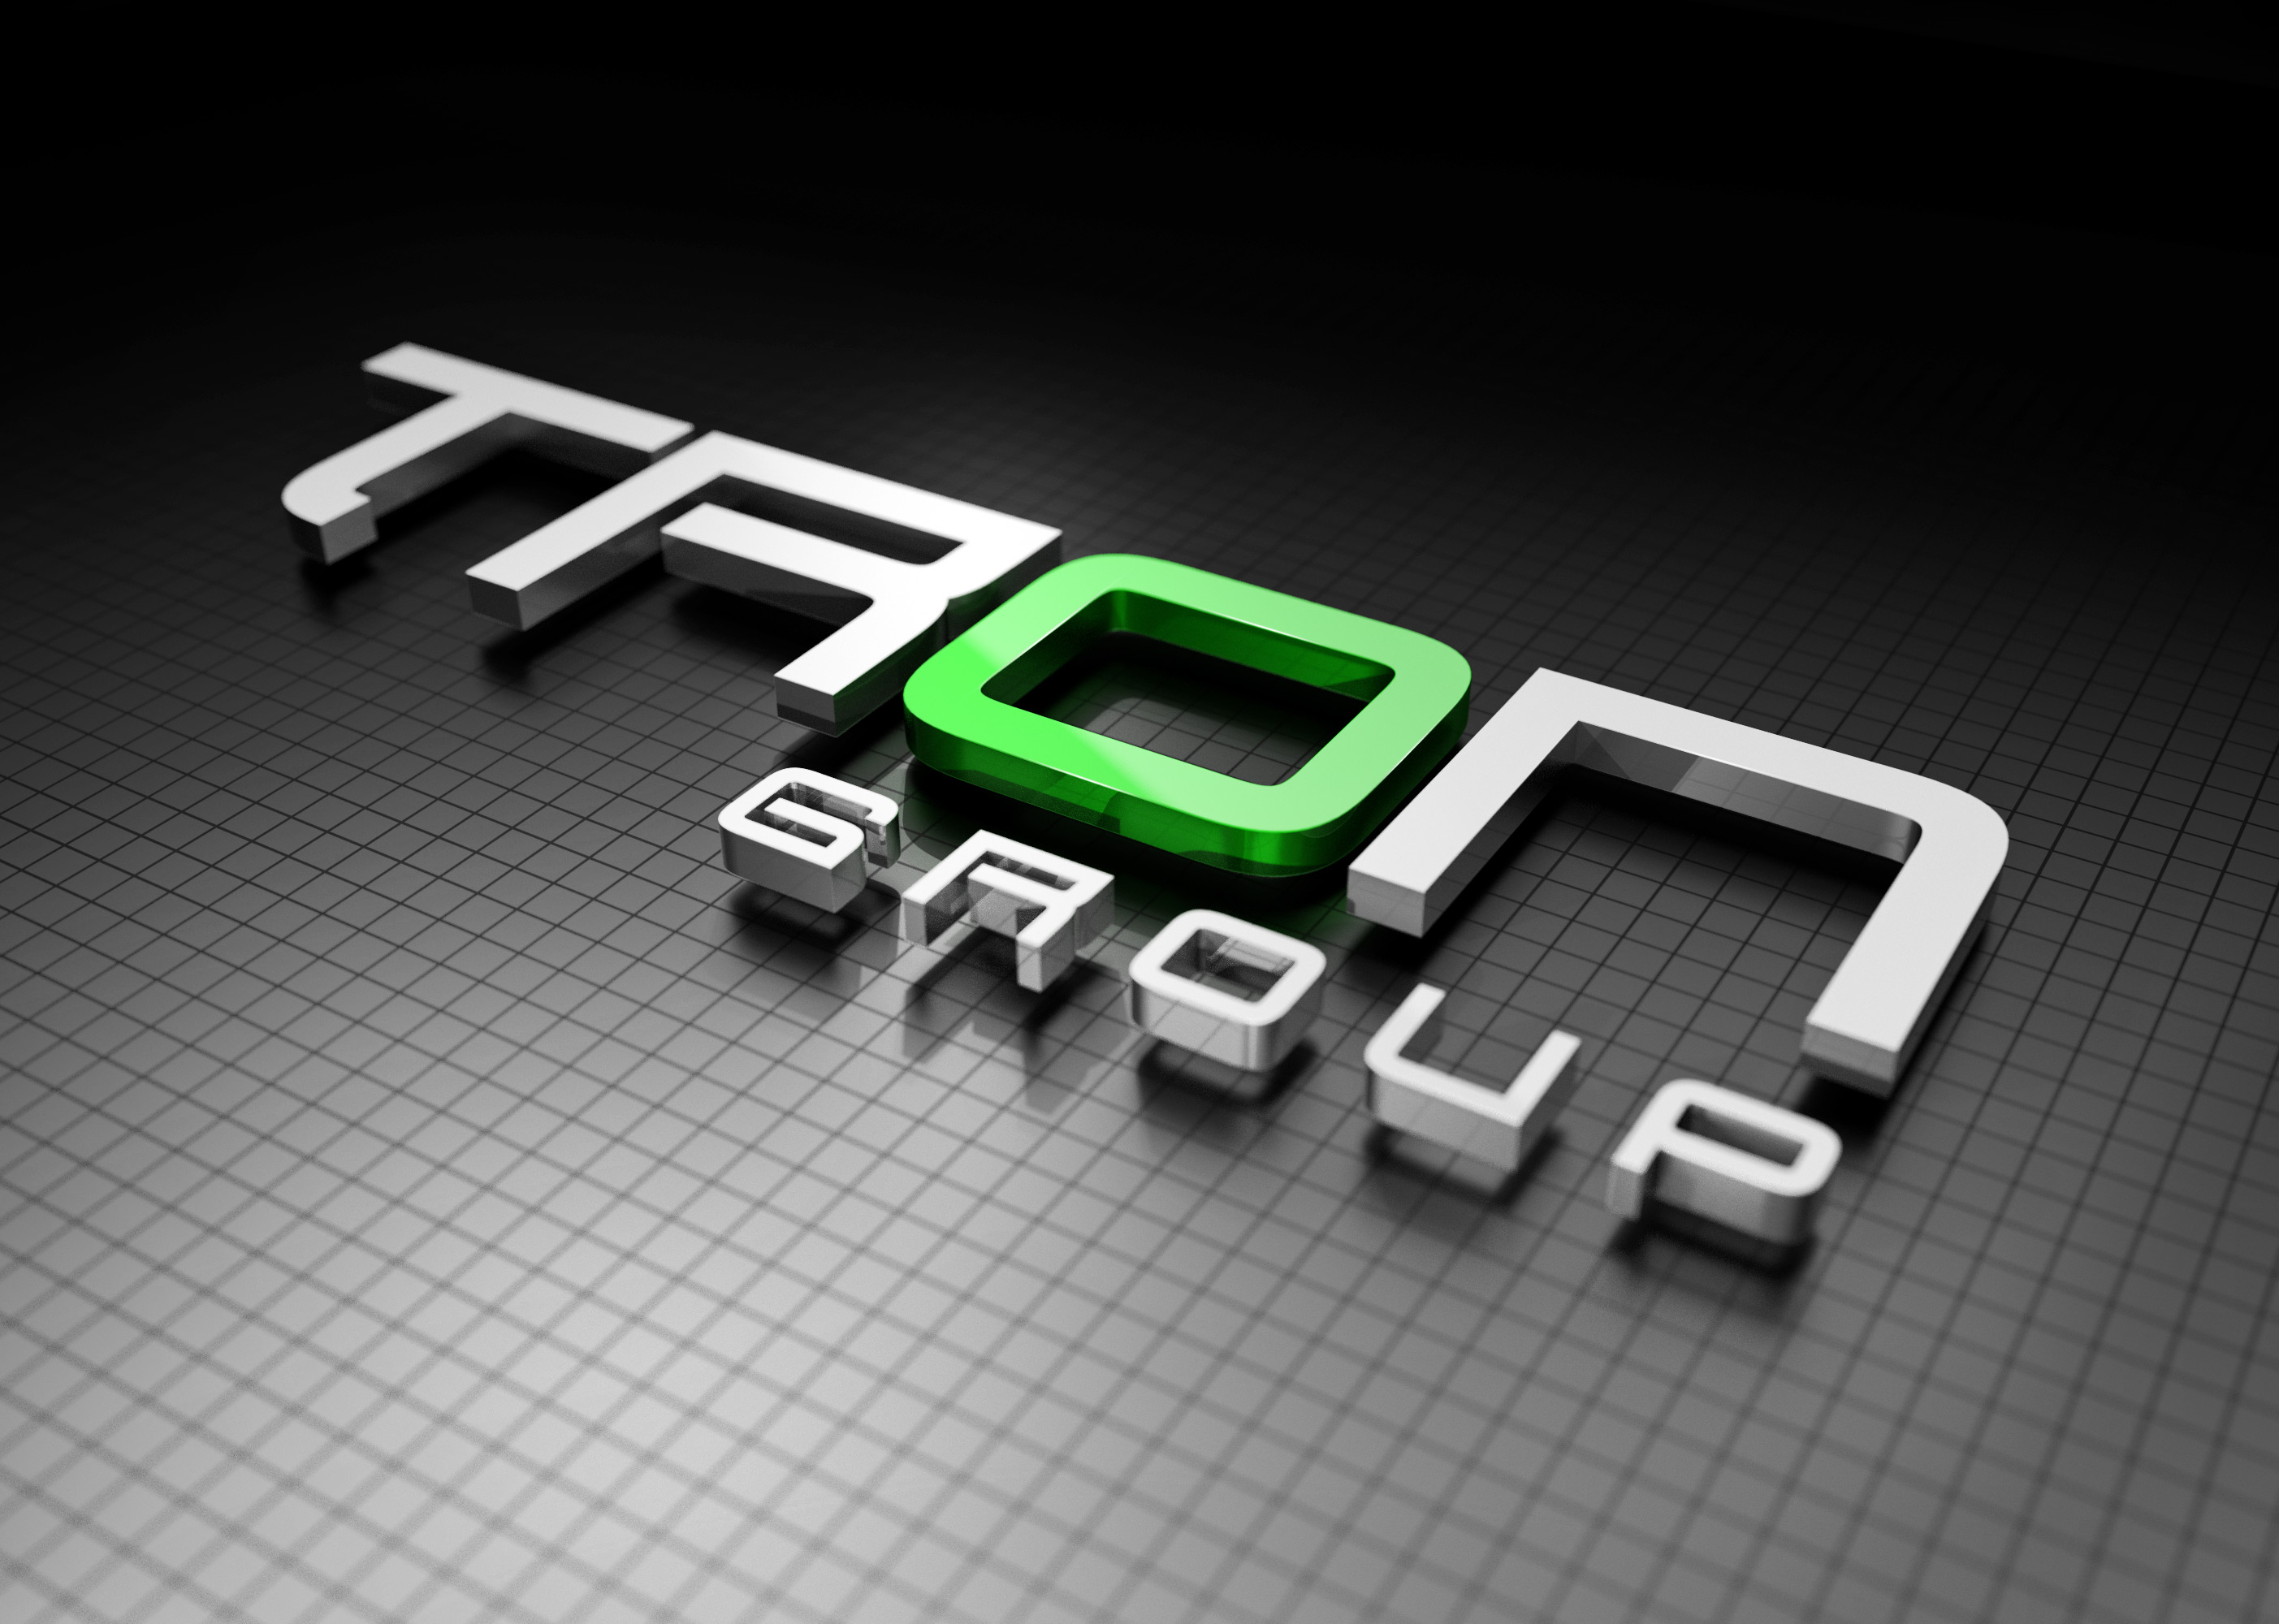 Tron Group